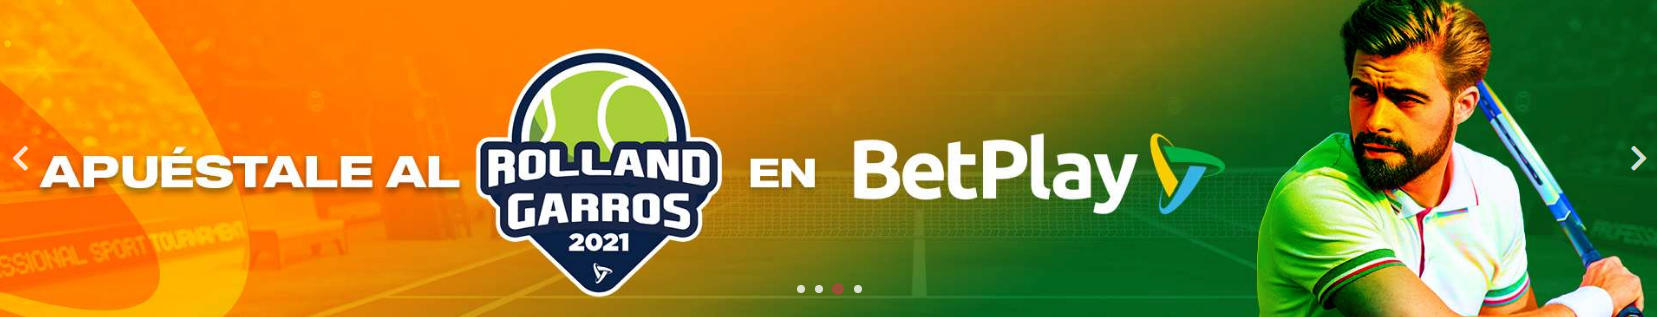 Betplay Tennis Promotion image